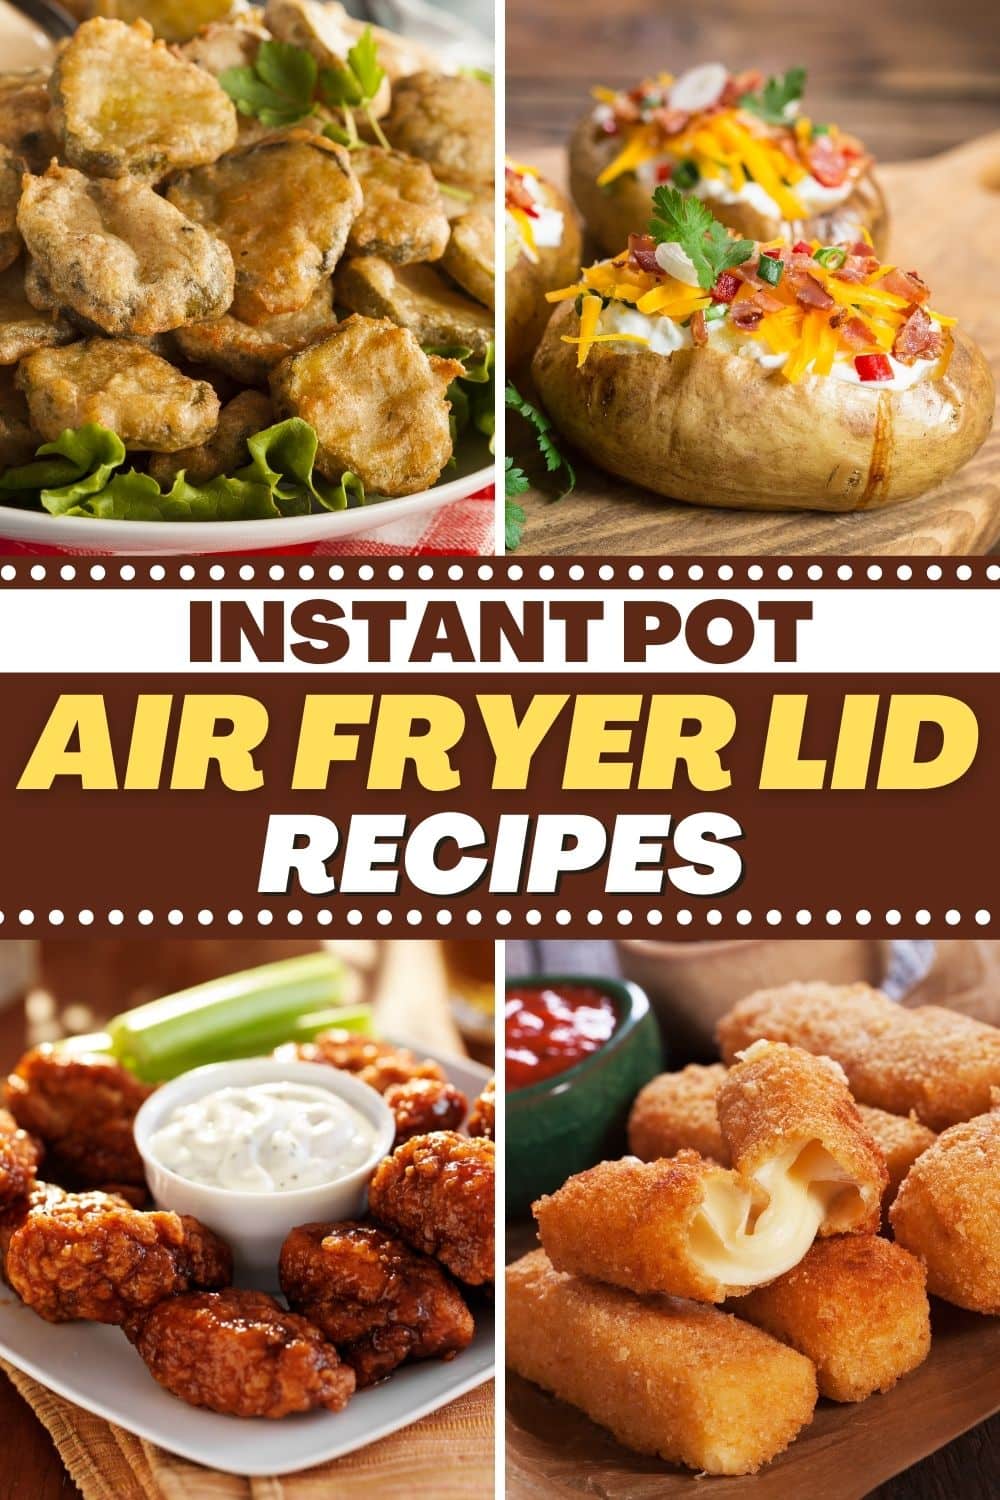 20 Instant Pot Air Fryer Lid Recipes - Insanely Good